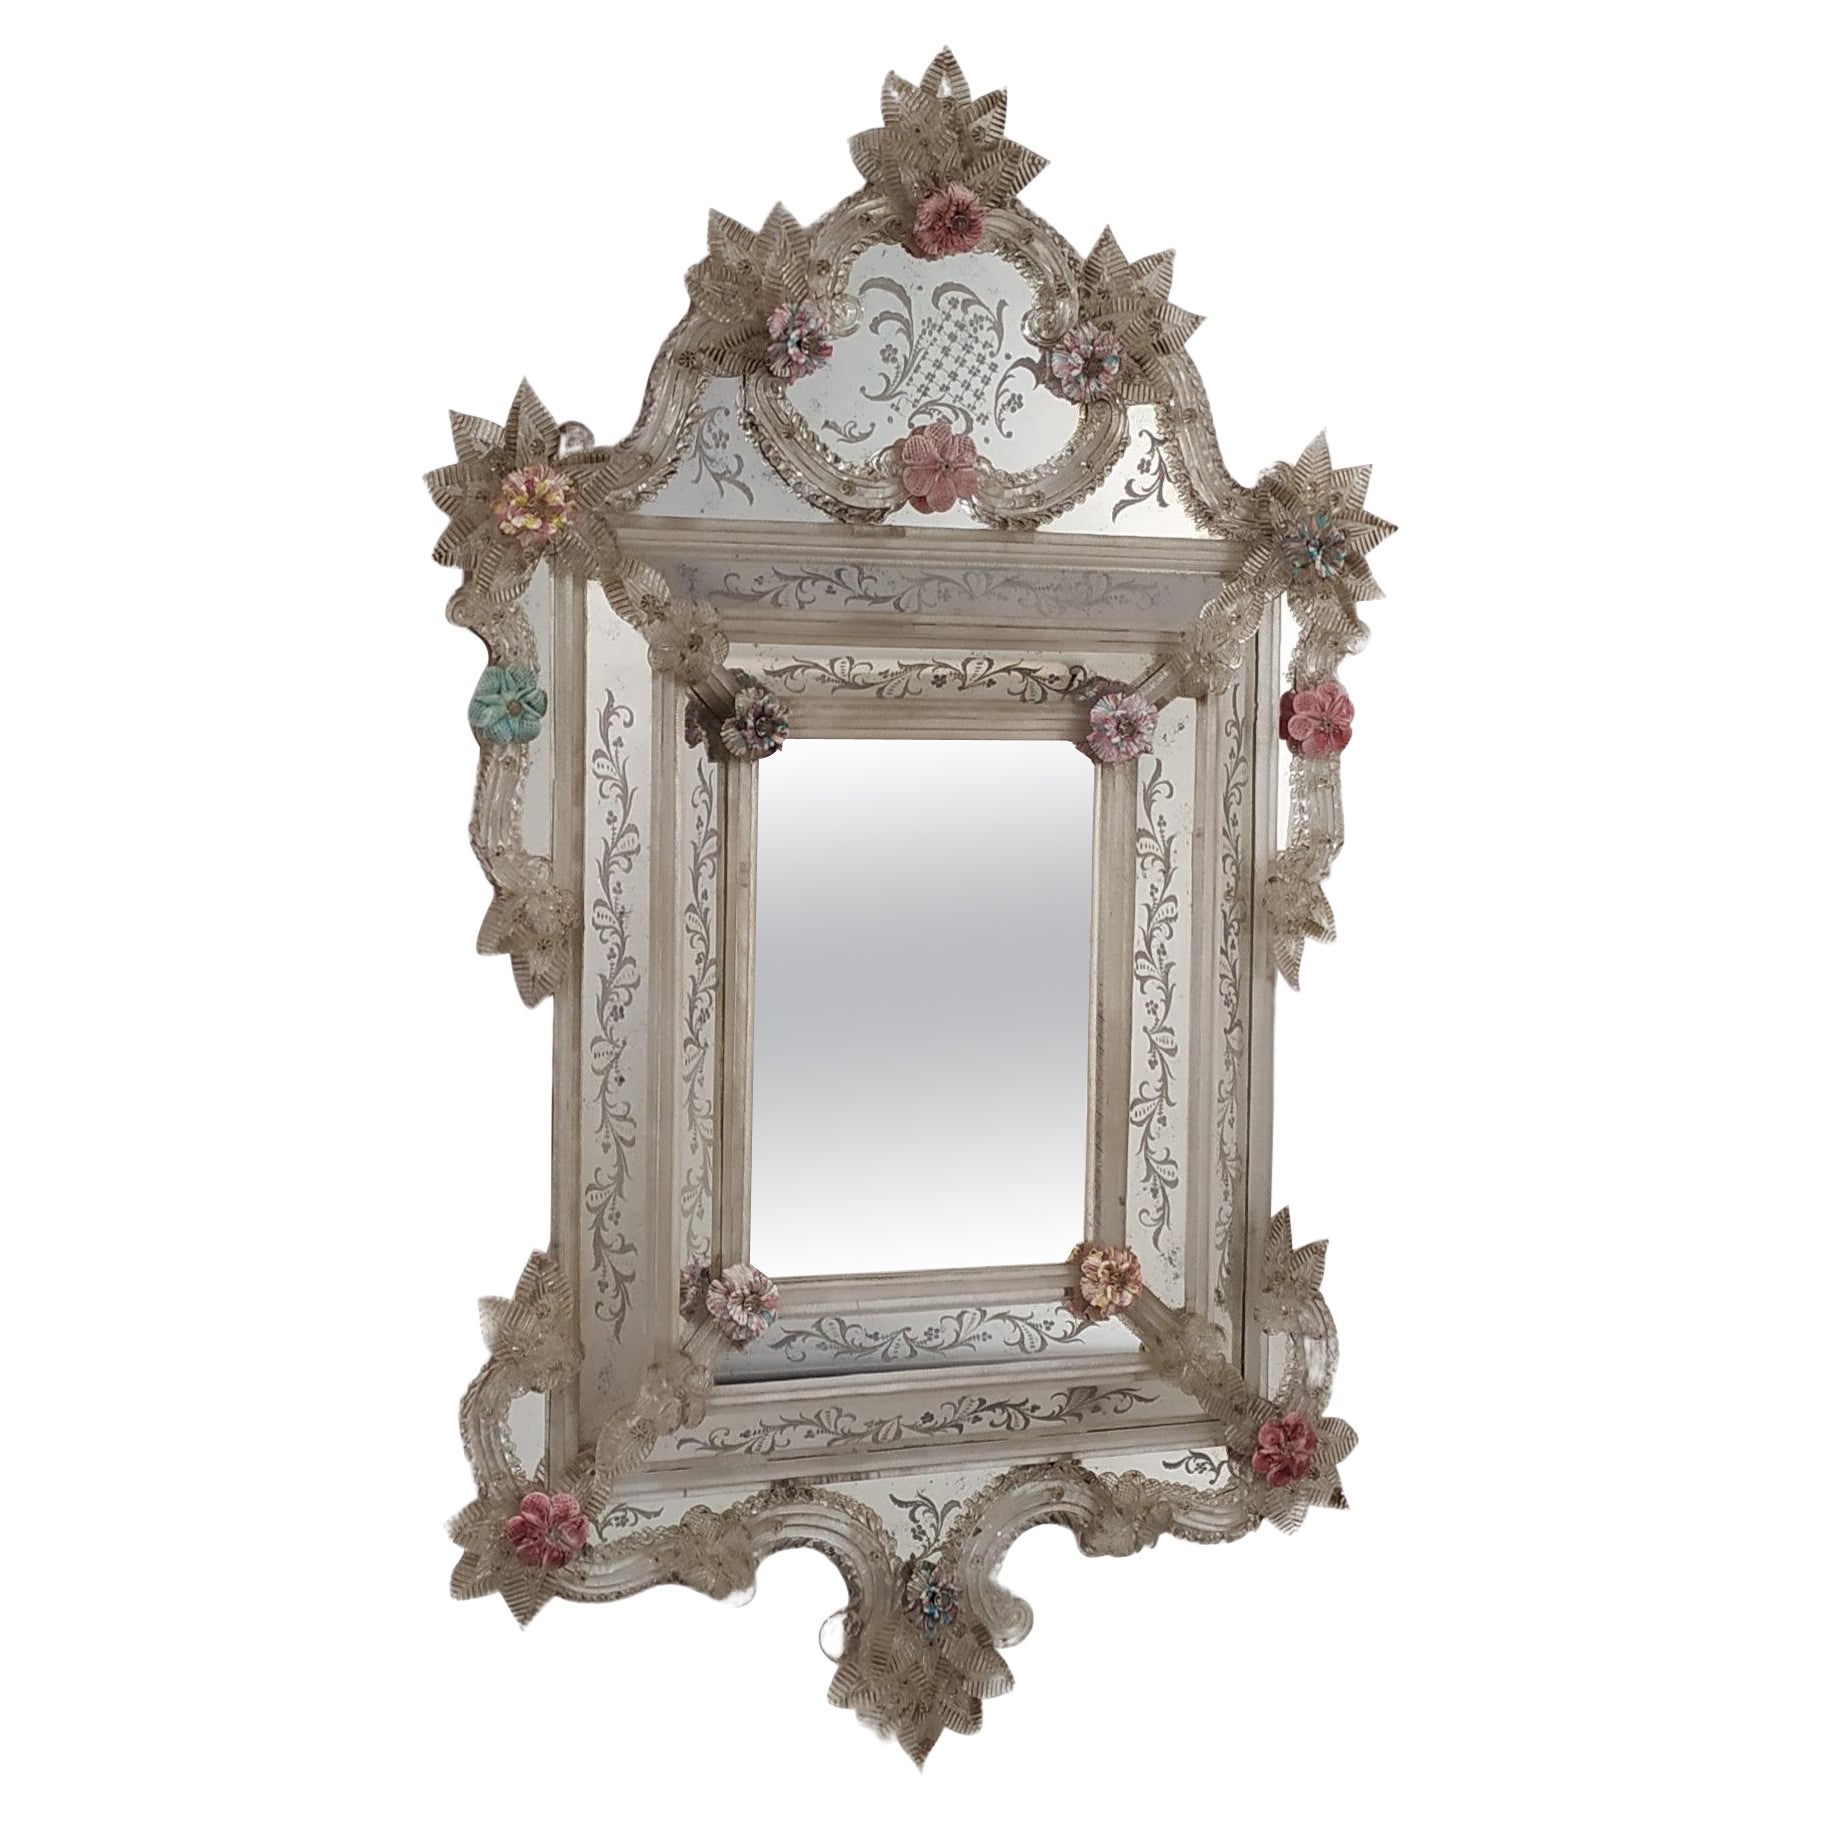  Laguna, reproduction d'un miroir vénitien ancien par Fratelli Tosi Murano